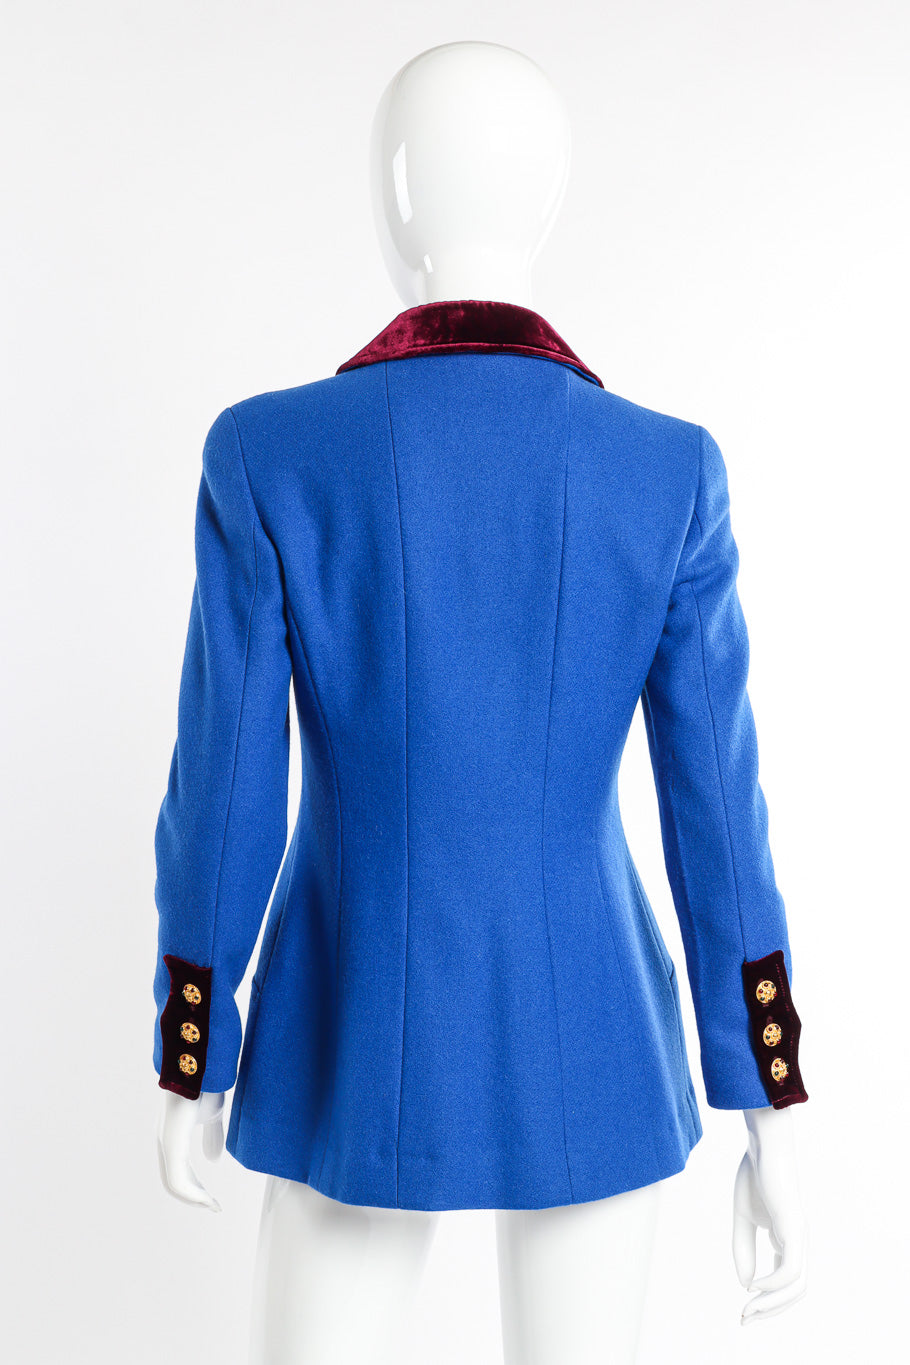 Velvet Collar Wool Jacket by Chanel on mannequin back @recessla